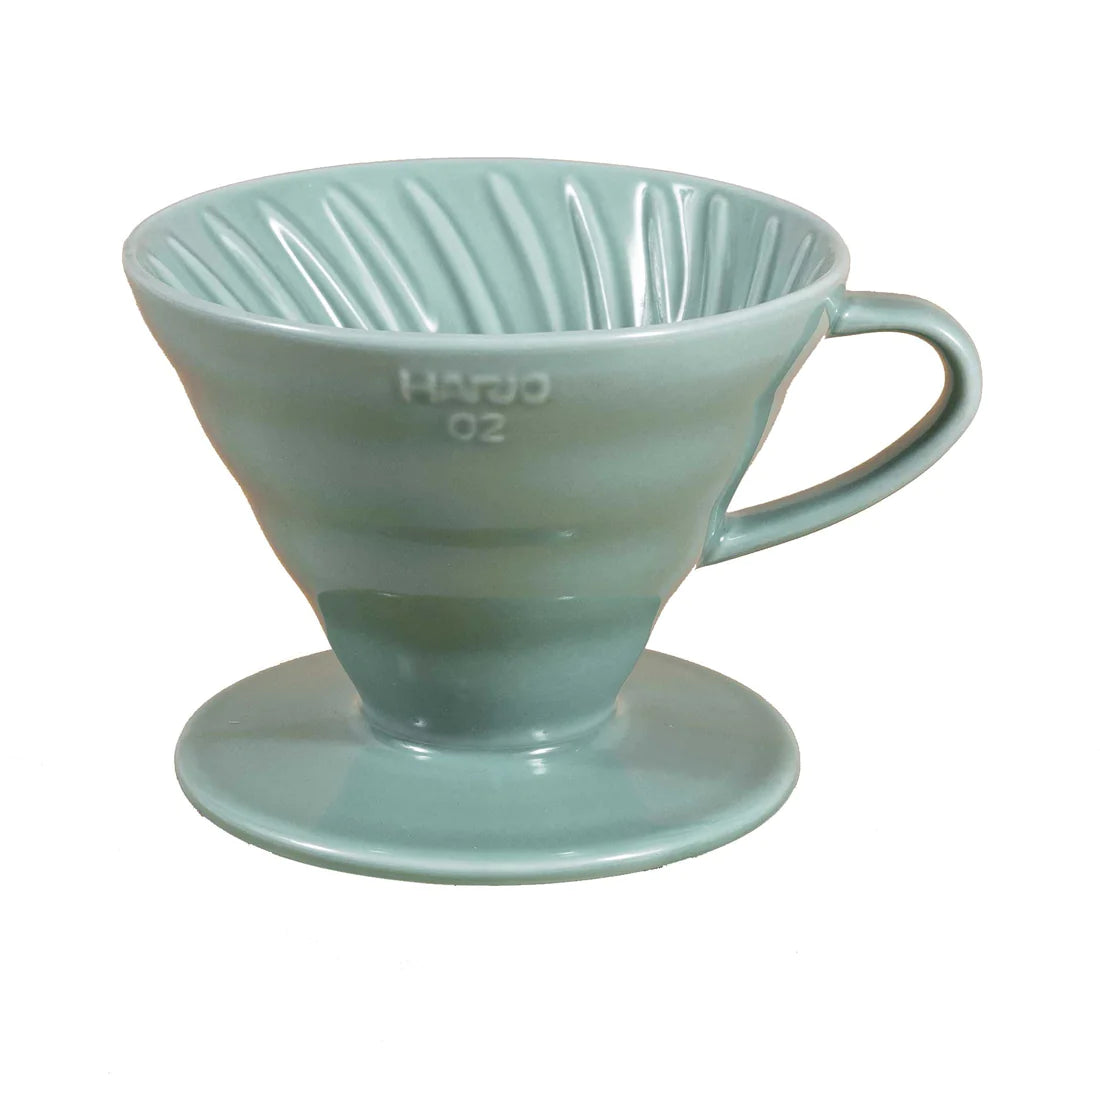 Hario V60-02 Ceramic Coffee Dripper - Turquoise